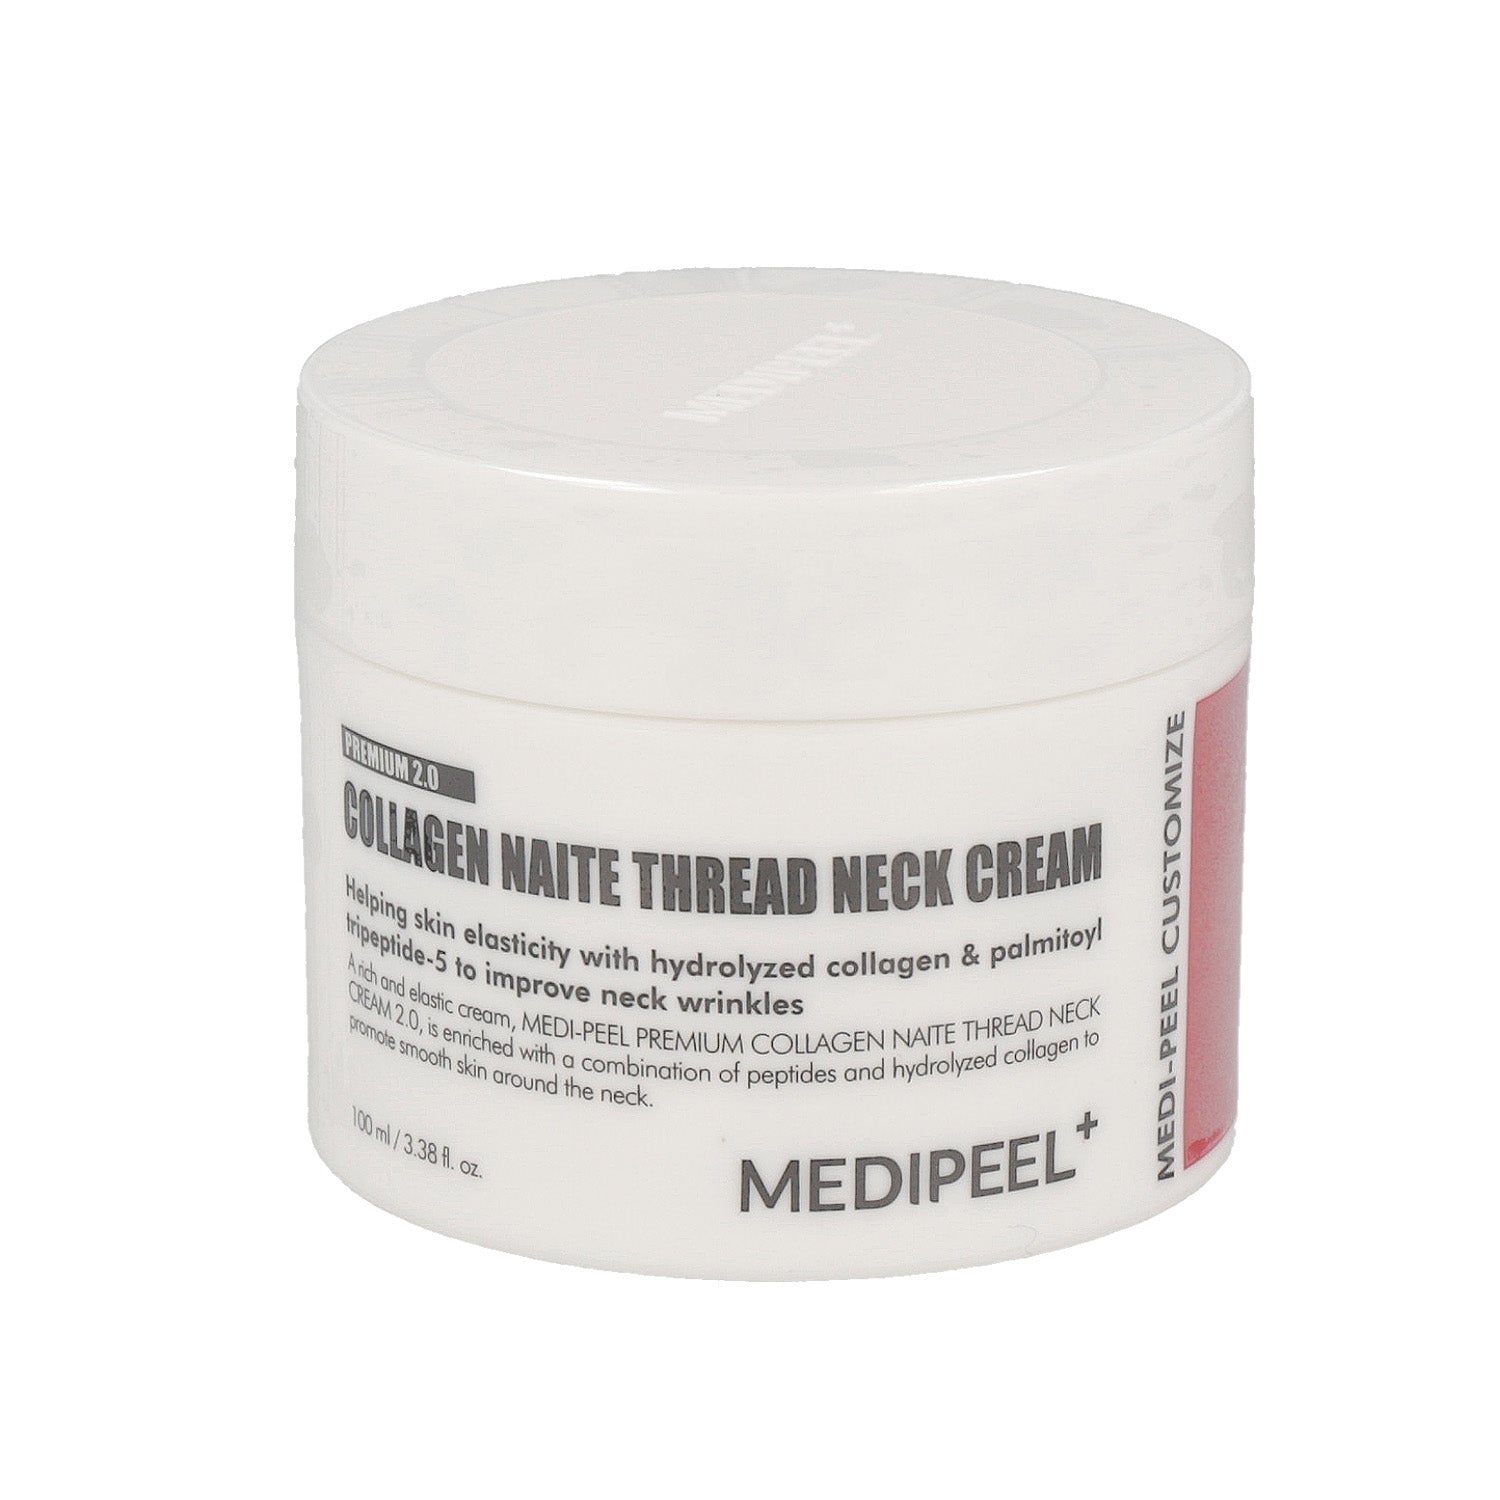  MEDI-PEEL Collagen Naite Thread Neck Cream 100ml.